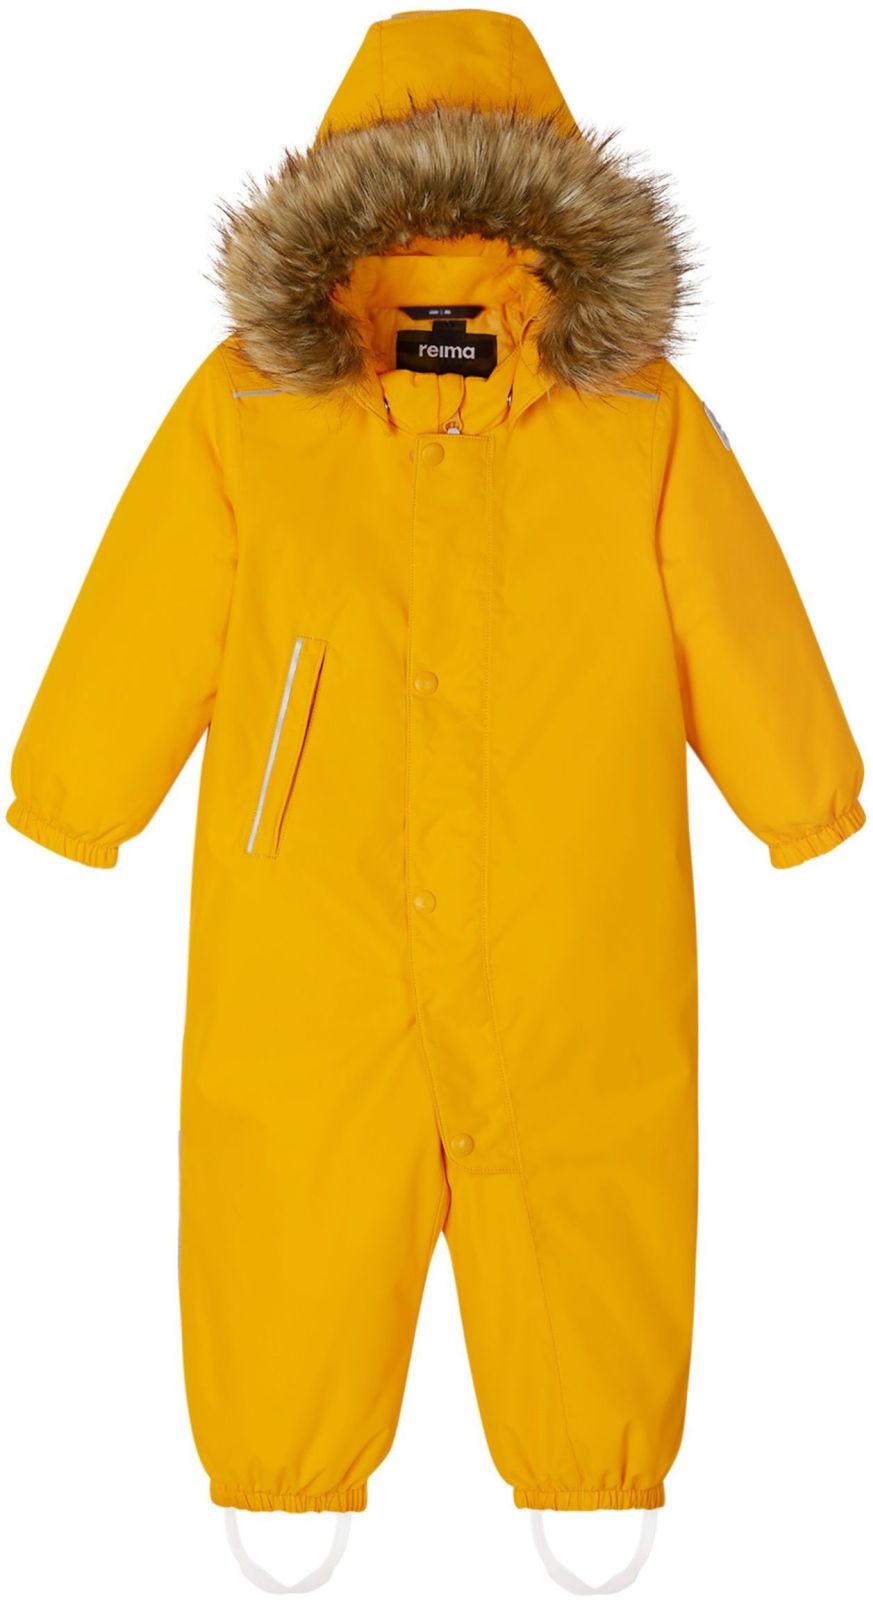 510316-2400_Reima Gotland - Orange yellow zimna detska kombineza s kozusinkou 80 86 92 98